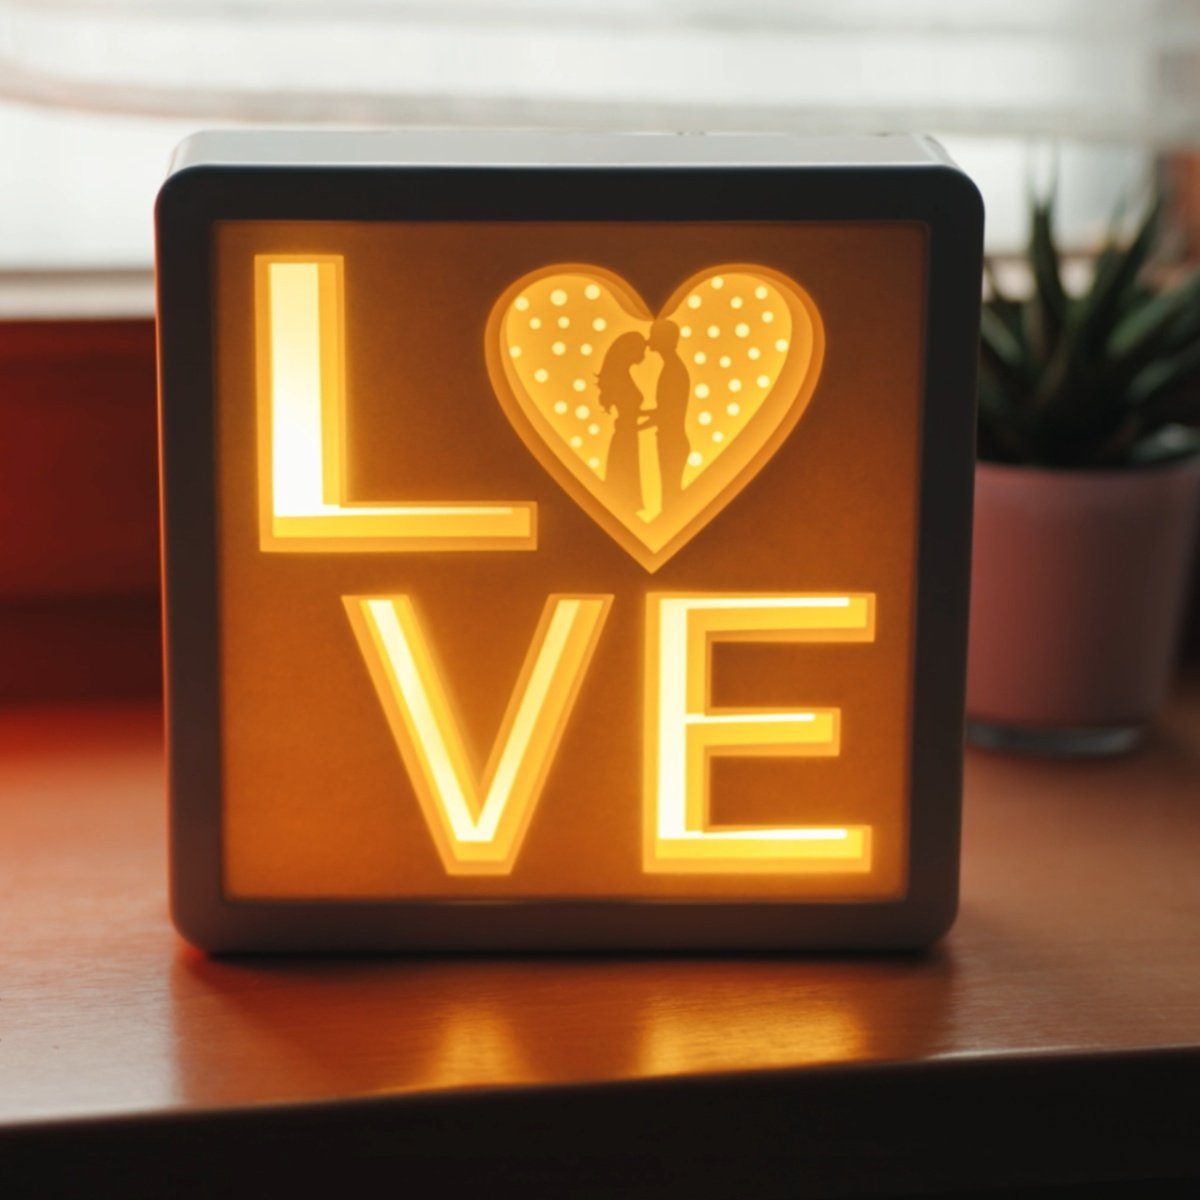 fest Love, CiM SQUARE - 16x5x16cm, LED integriert, LED Lichtbox Warmweiß, Nachtlicht, kabellose Dekoration 3D Papercut Shadowbox, Wohnaccessoire,